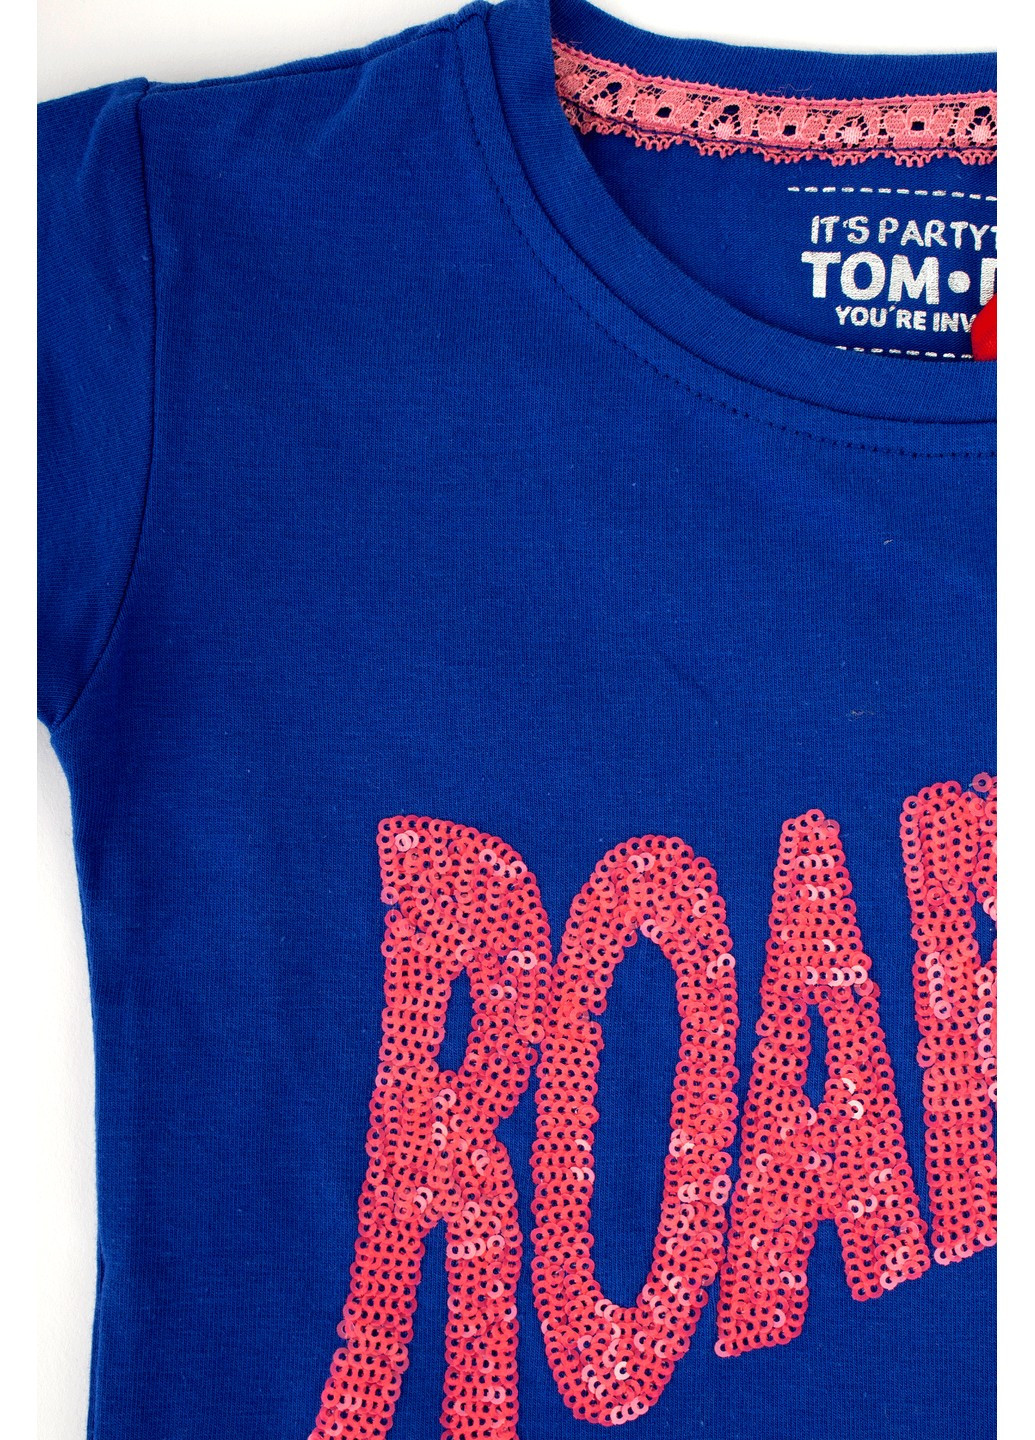 Синяя летняя футболка на девочку tom-du синяя с аппликацией и пайетами TOM DU